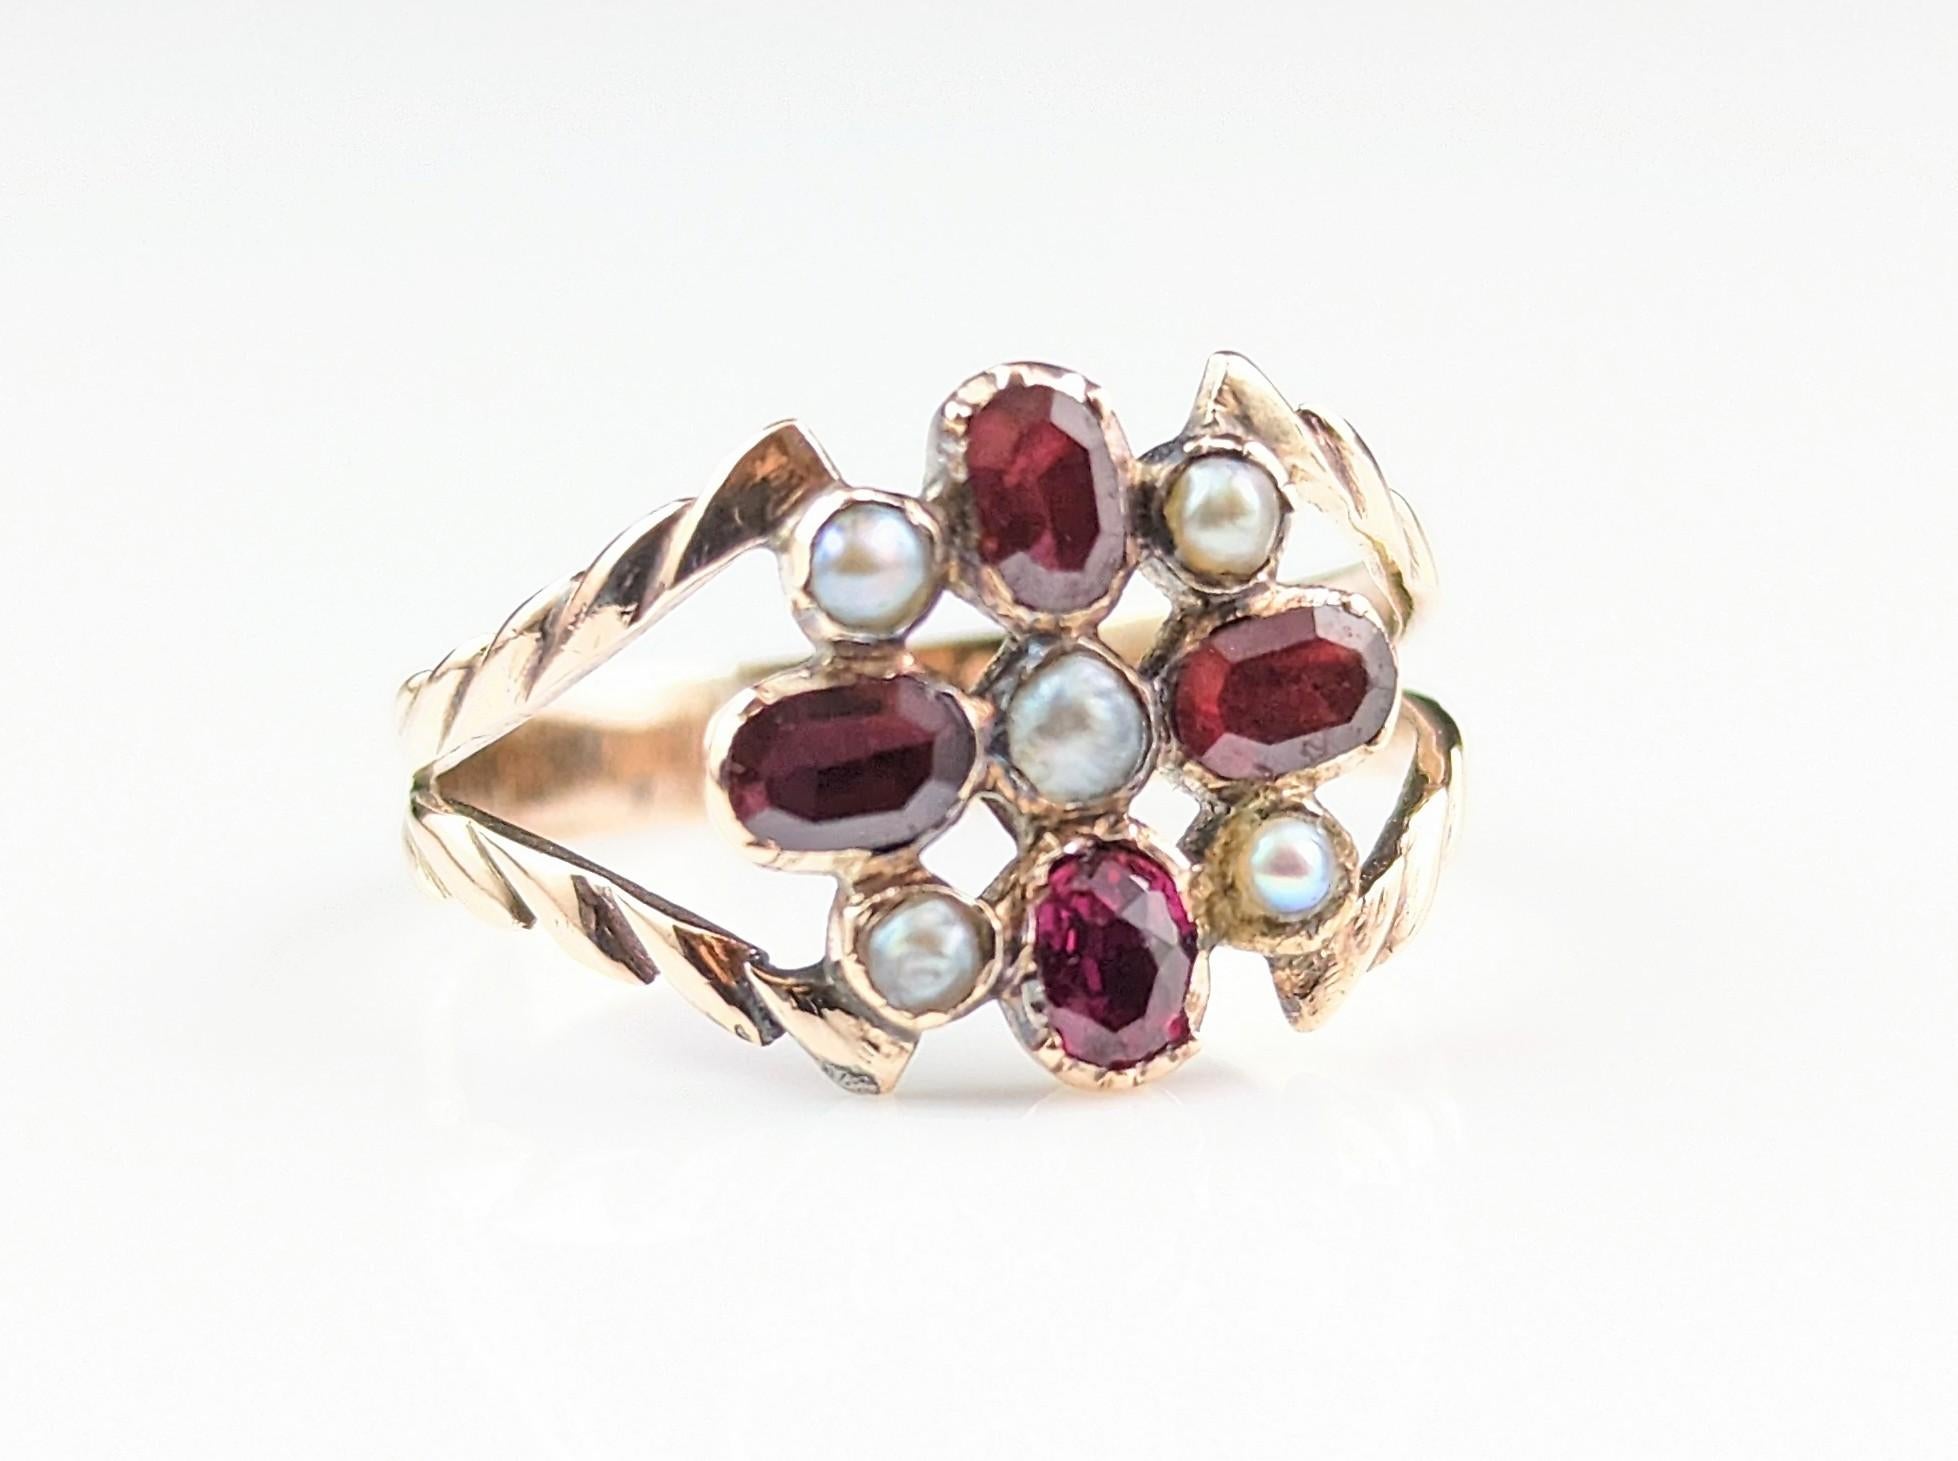 Antique Regency Era Floral Ring, Flat Cut Garnet, Pearl and Ruby, 9k Gold 7